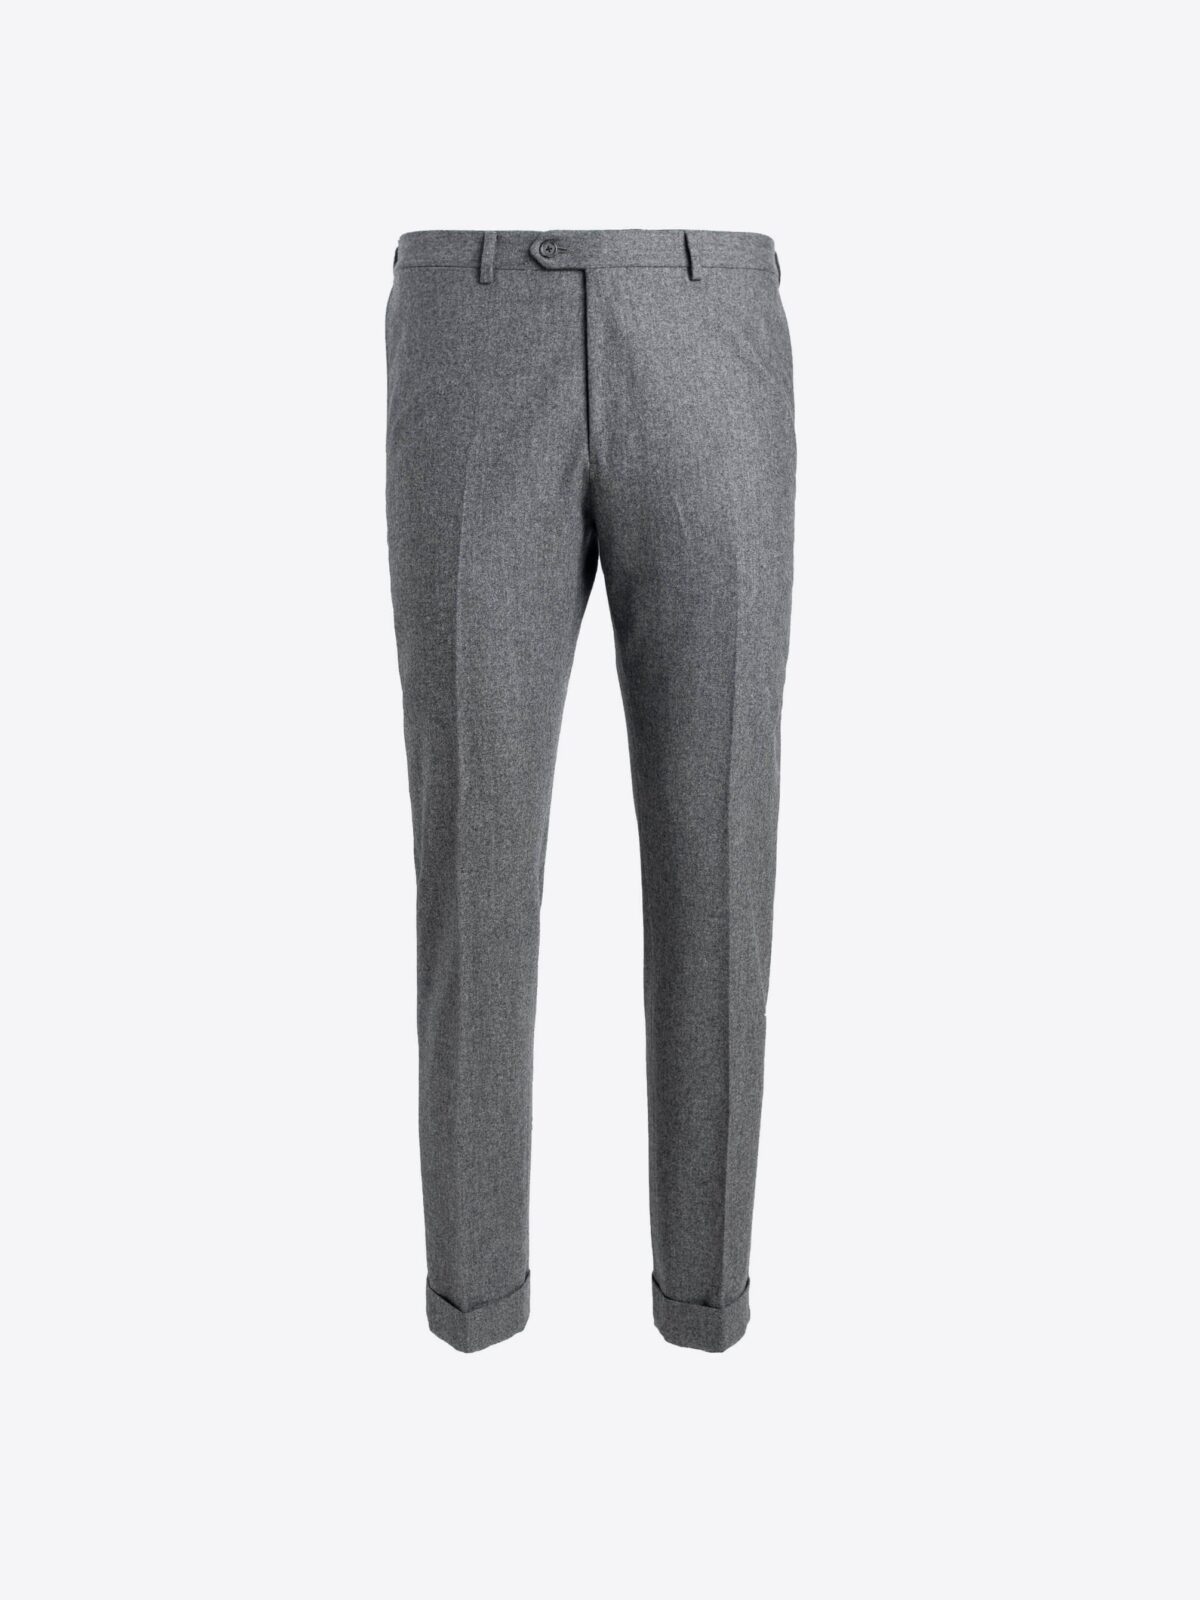 Di Sondrio Light Grey Heavy Stretch Twill Chino - Custom Fit Pants